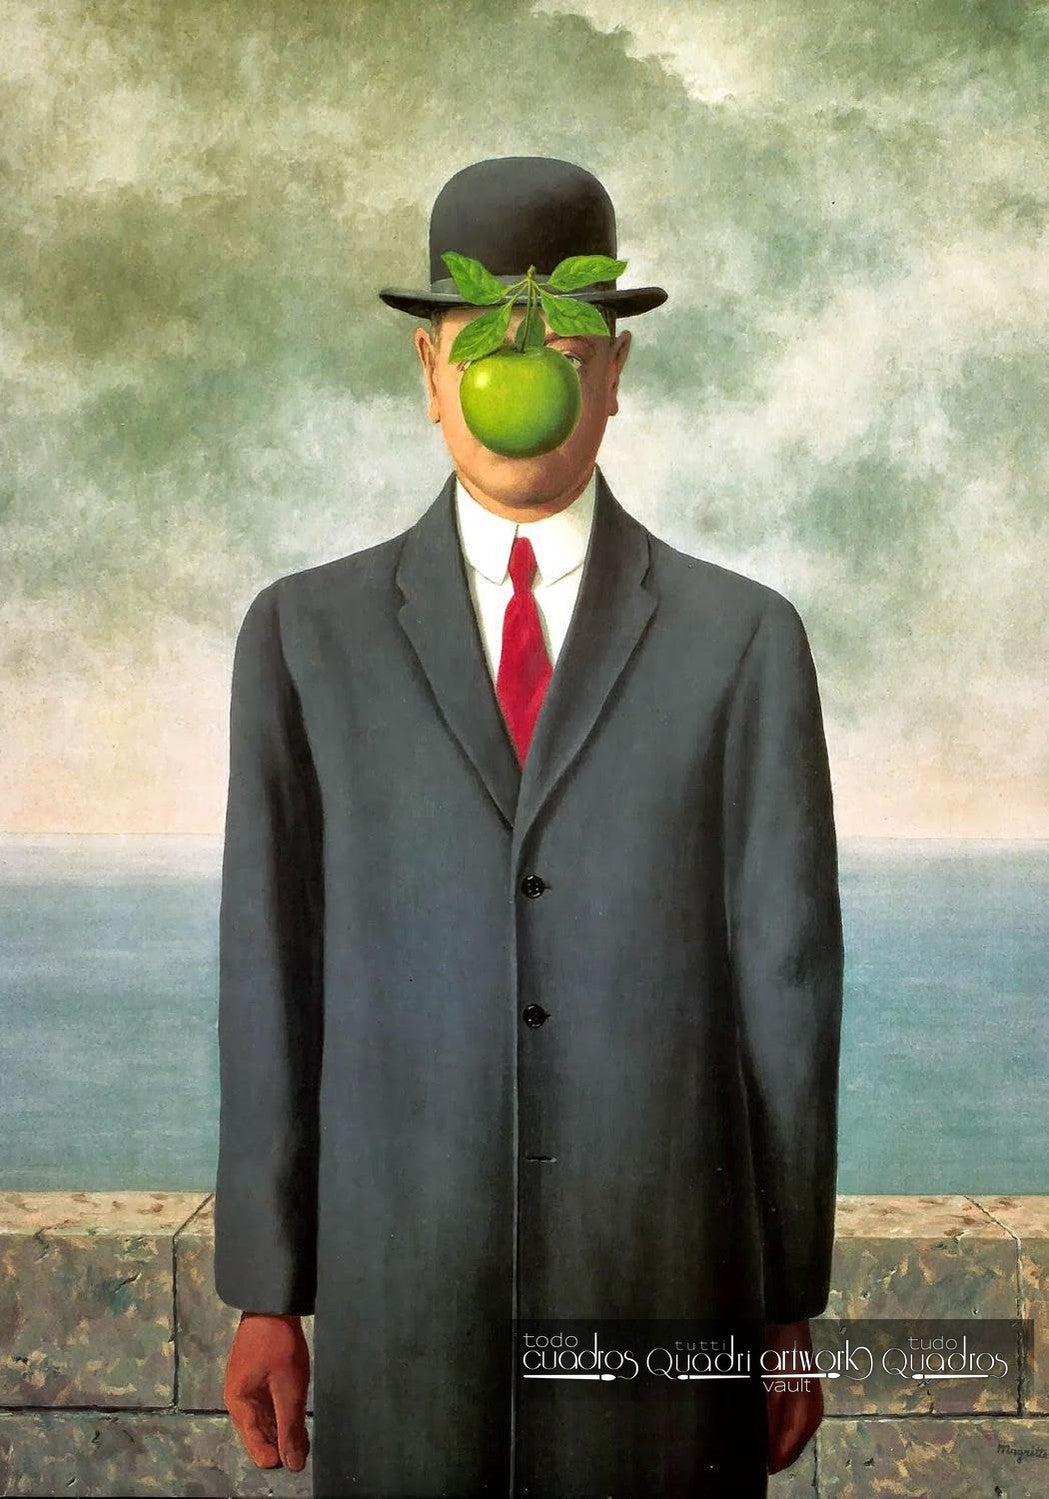 El hijo del hombre, Magritte